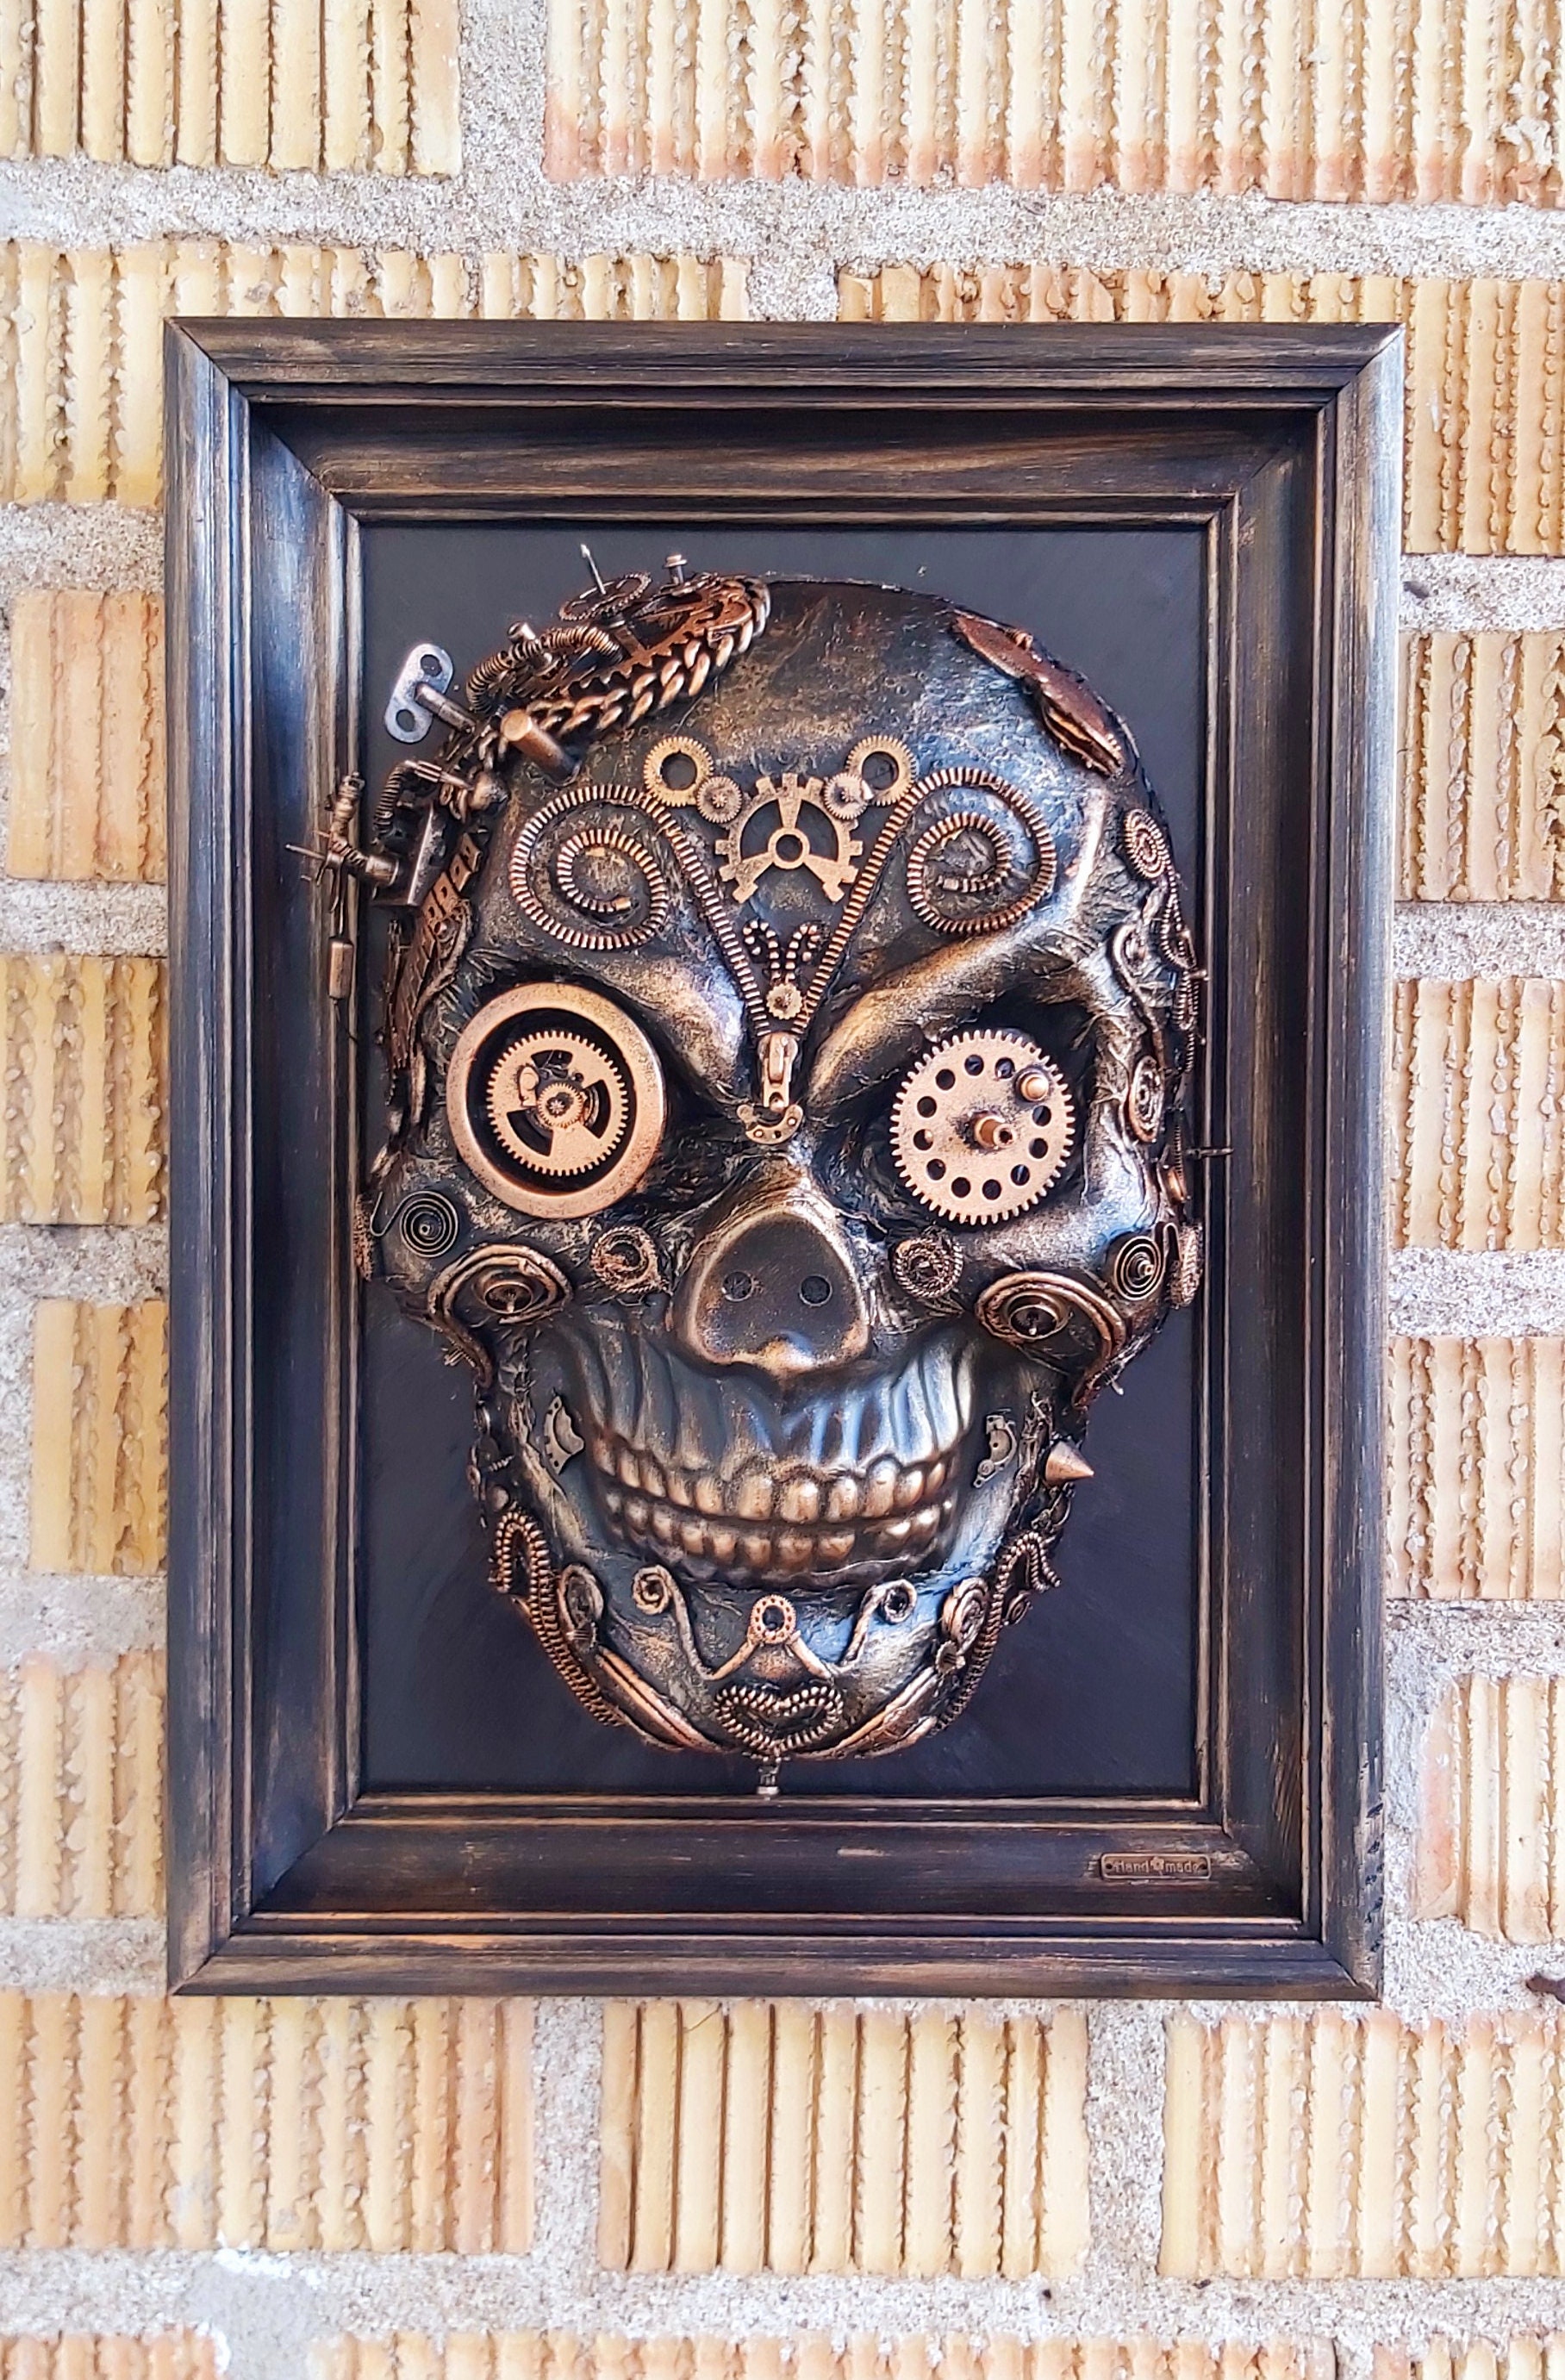 Candy skulls sweet deart hand crafted resin desktop coin bank red skull skeleton 